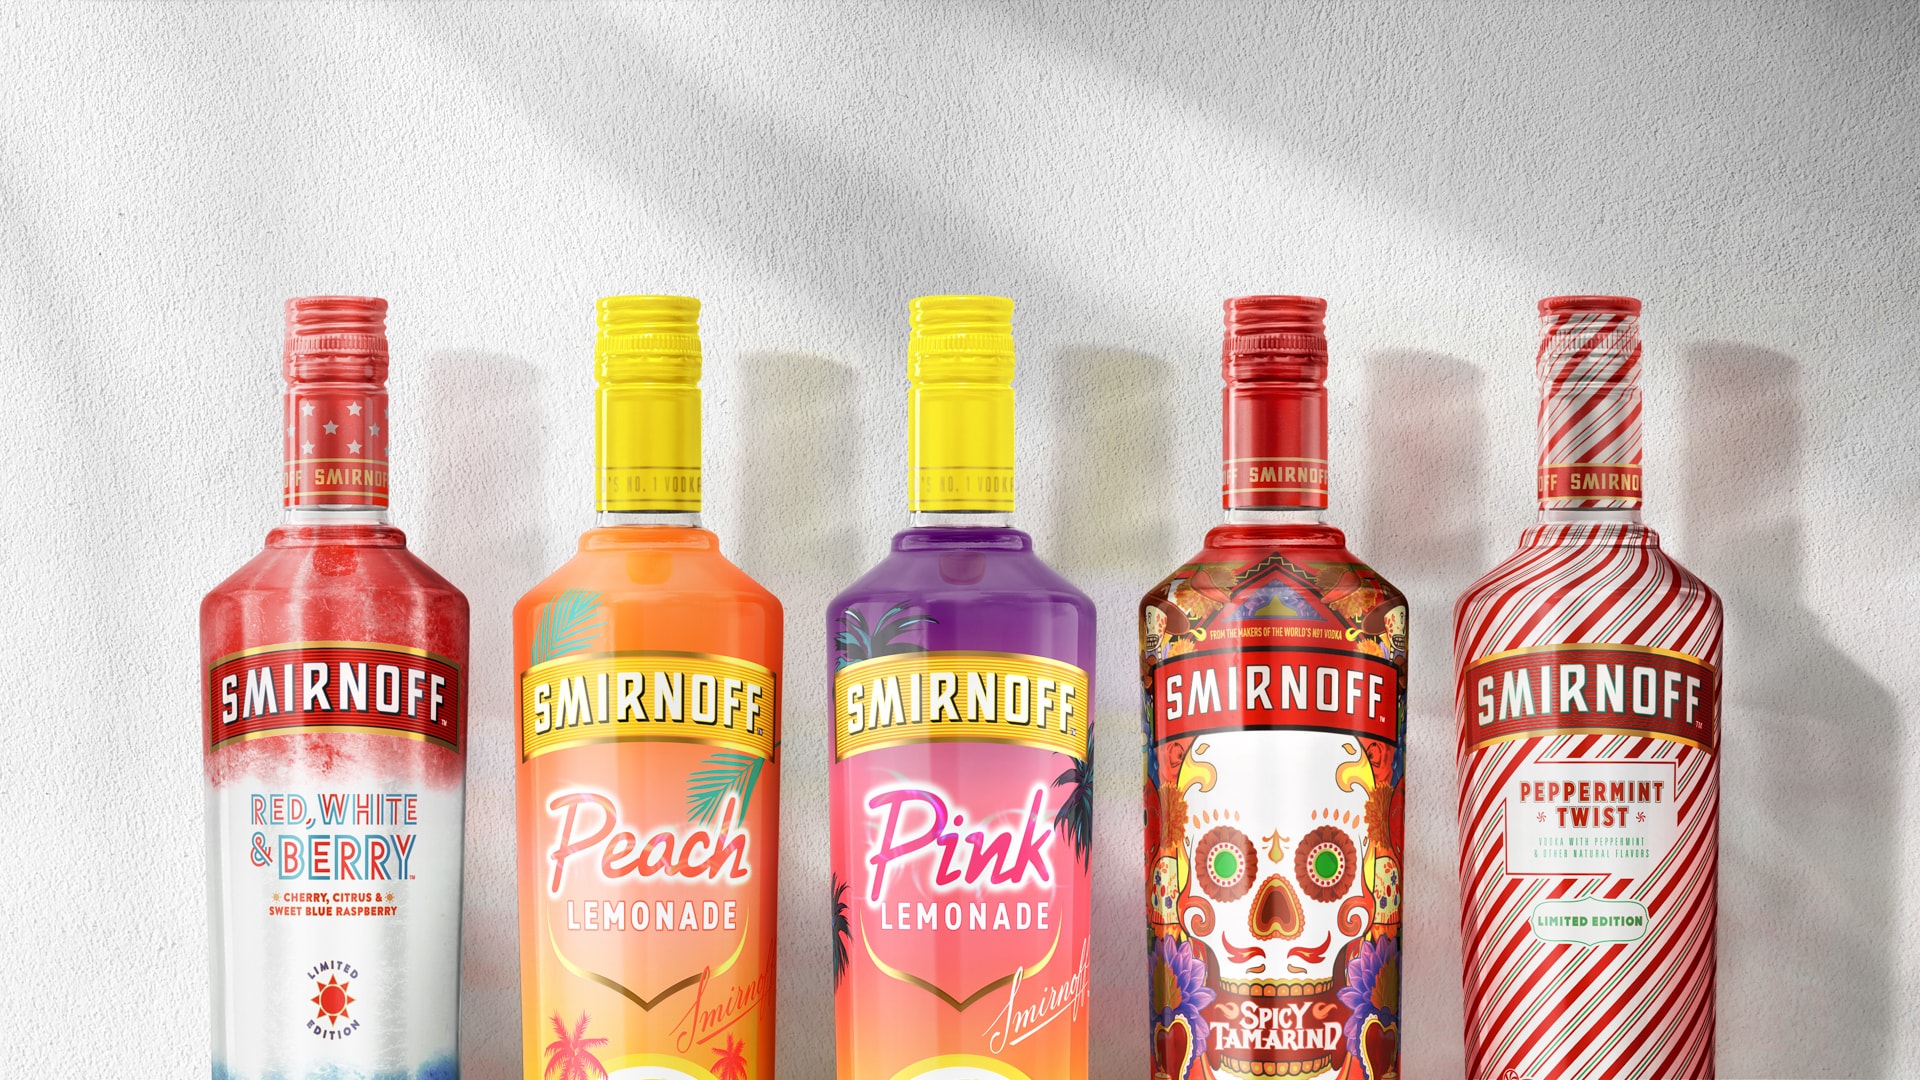 Smirnoff Pink Lemonade, Product page